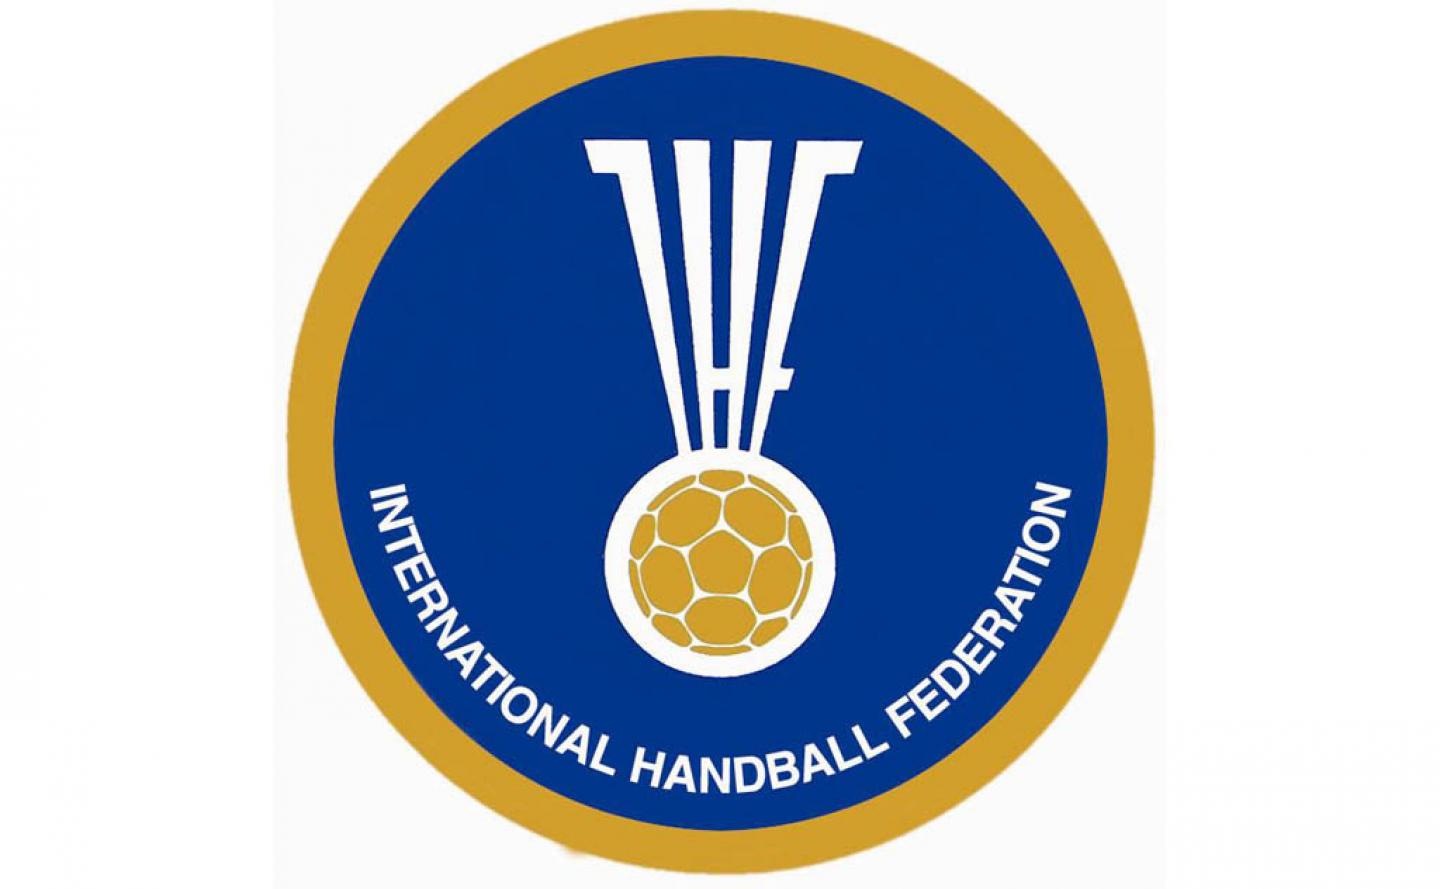 XXXVI Ordinary Congress of the International Handball Federation in 2017